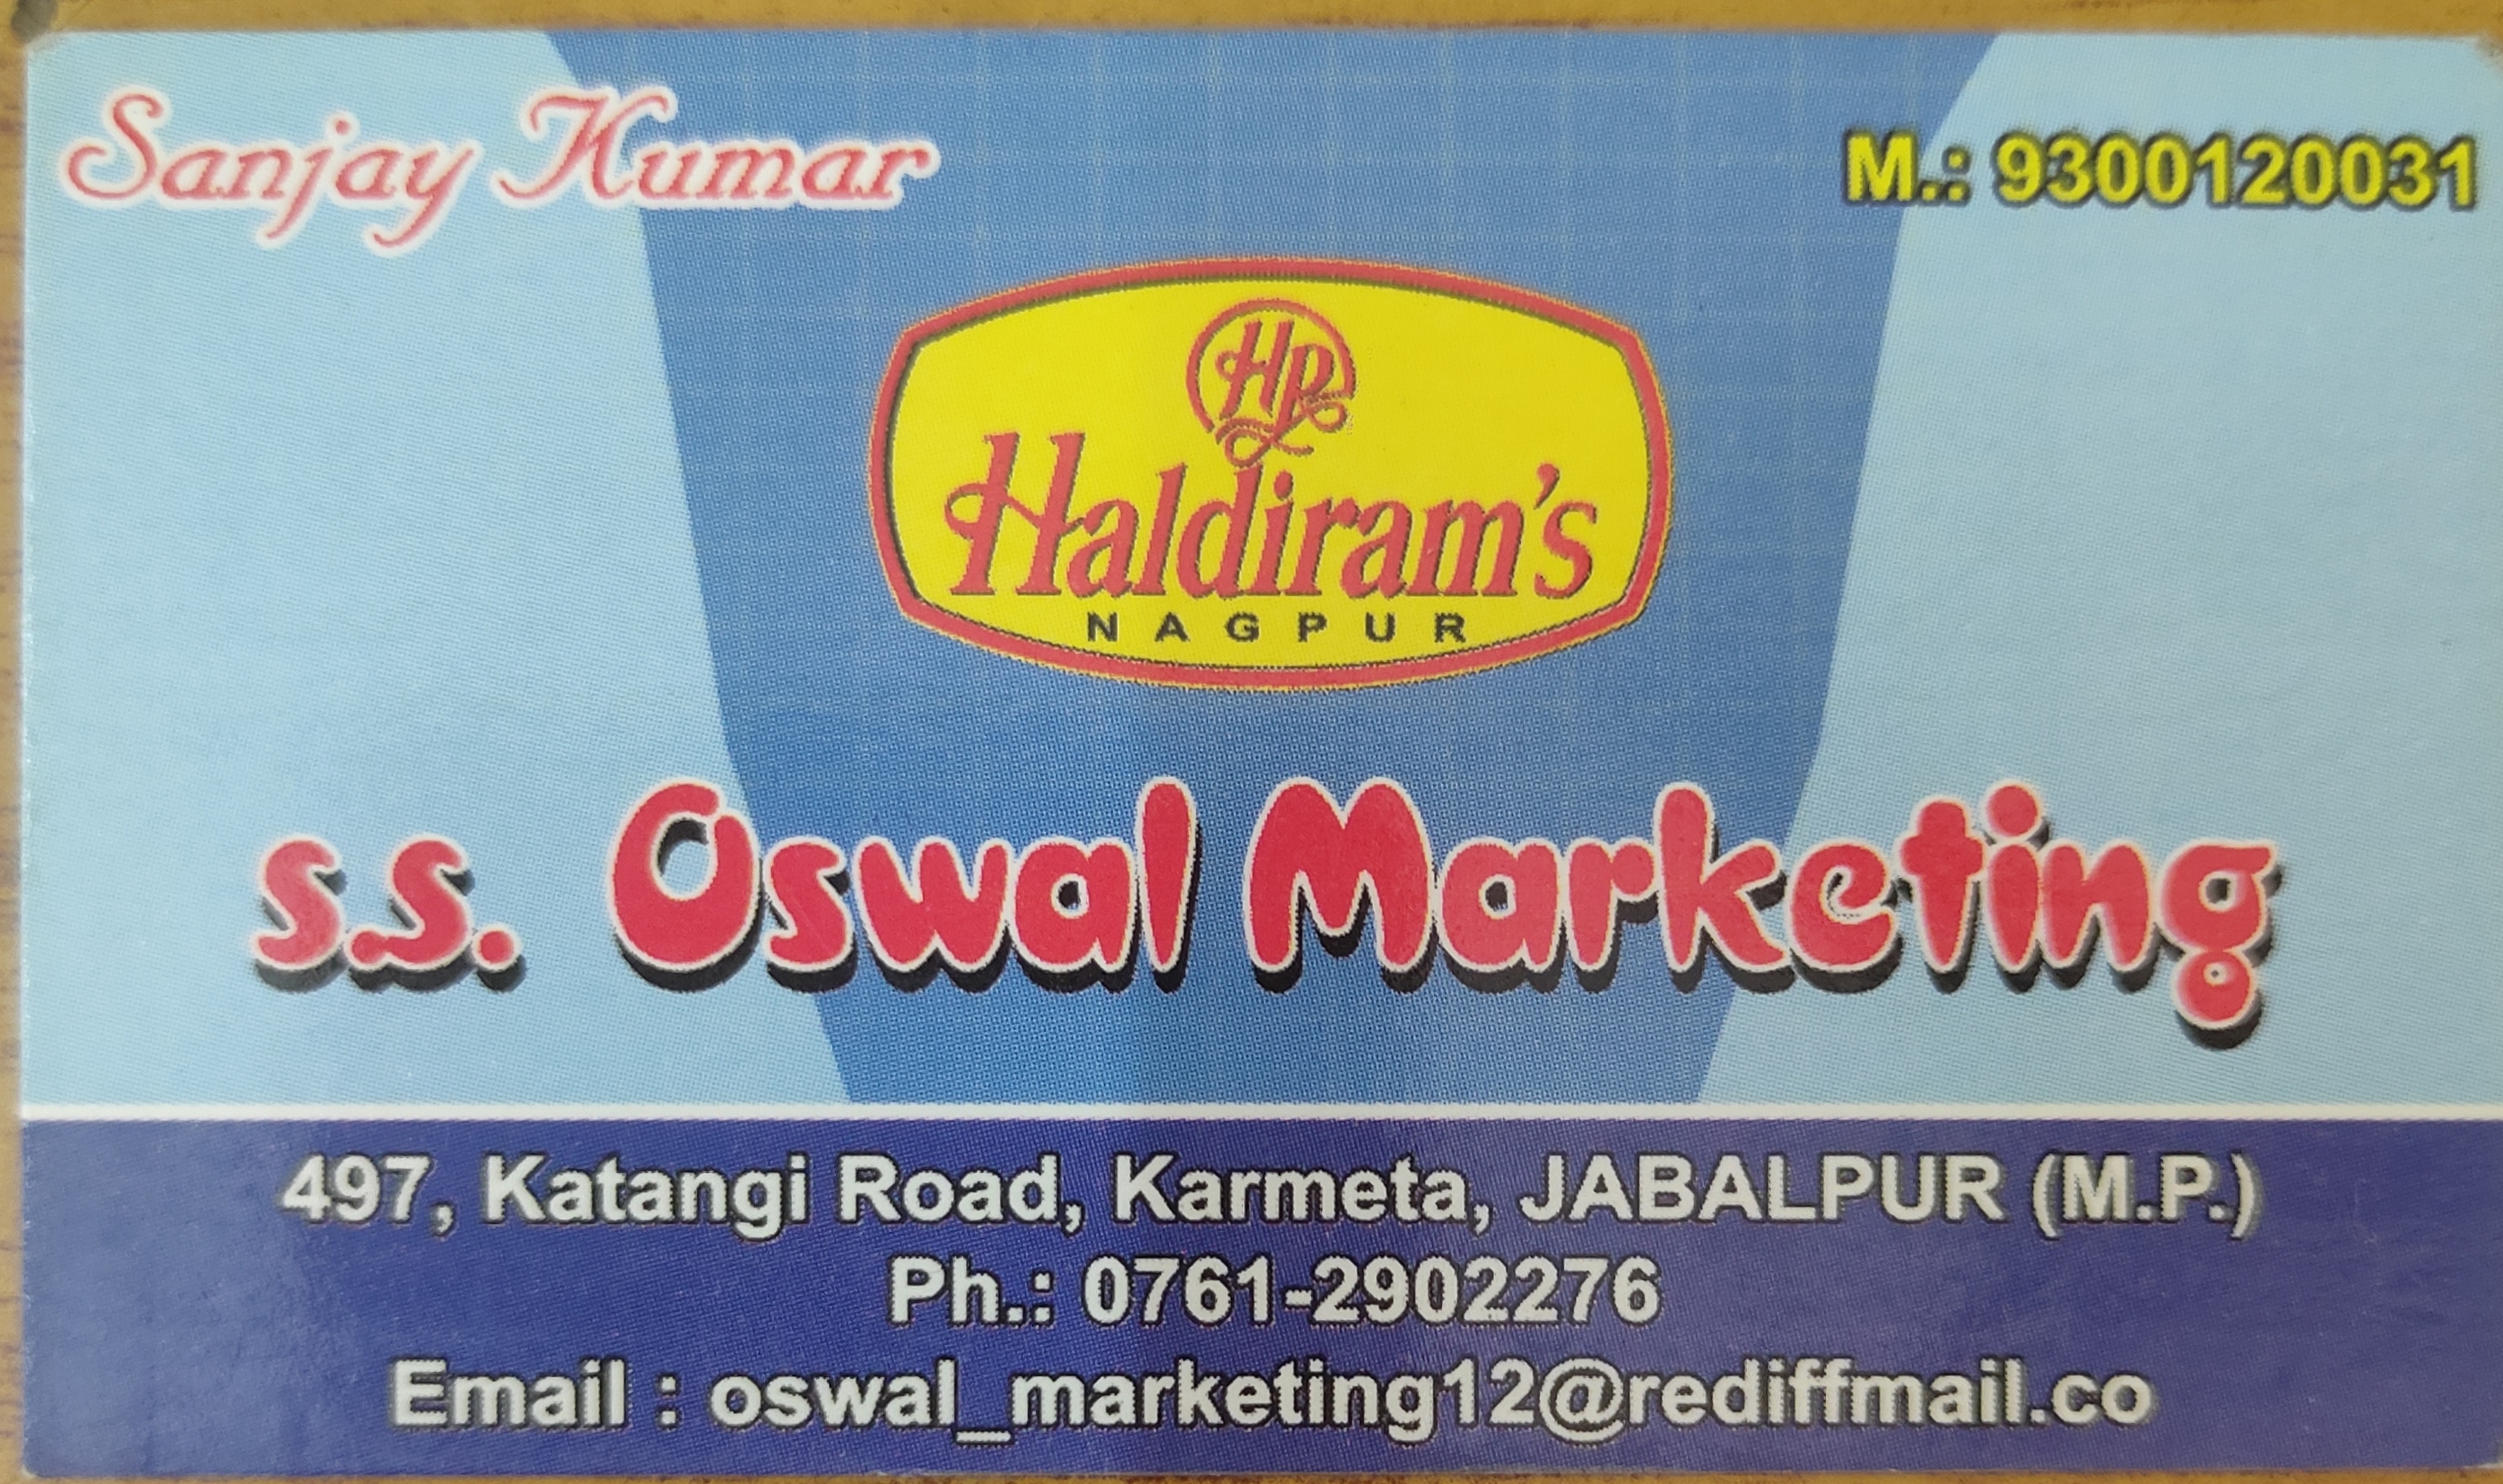 S.S. Oswal Marketing Jabalpur